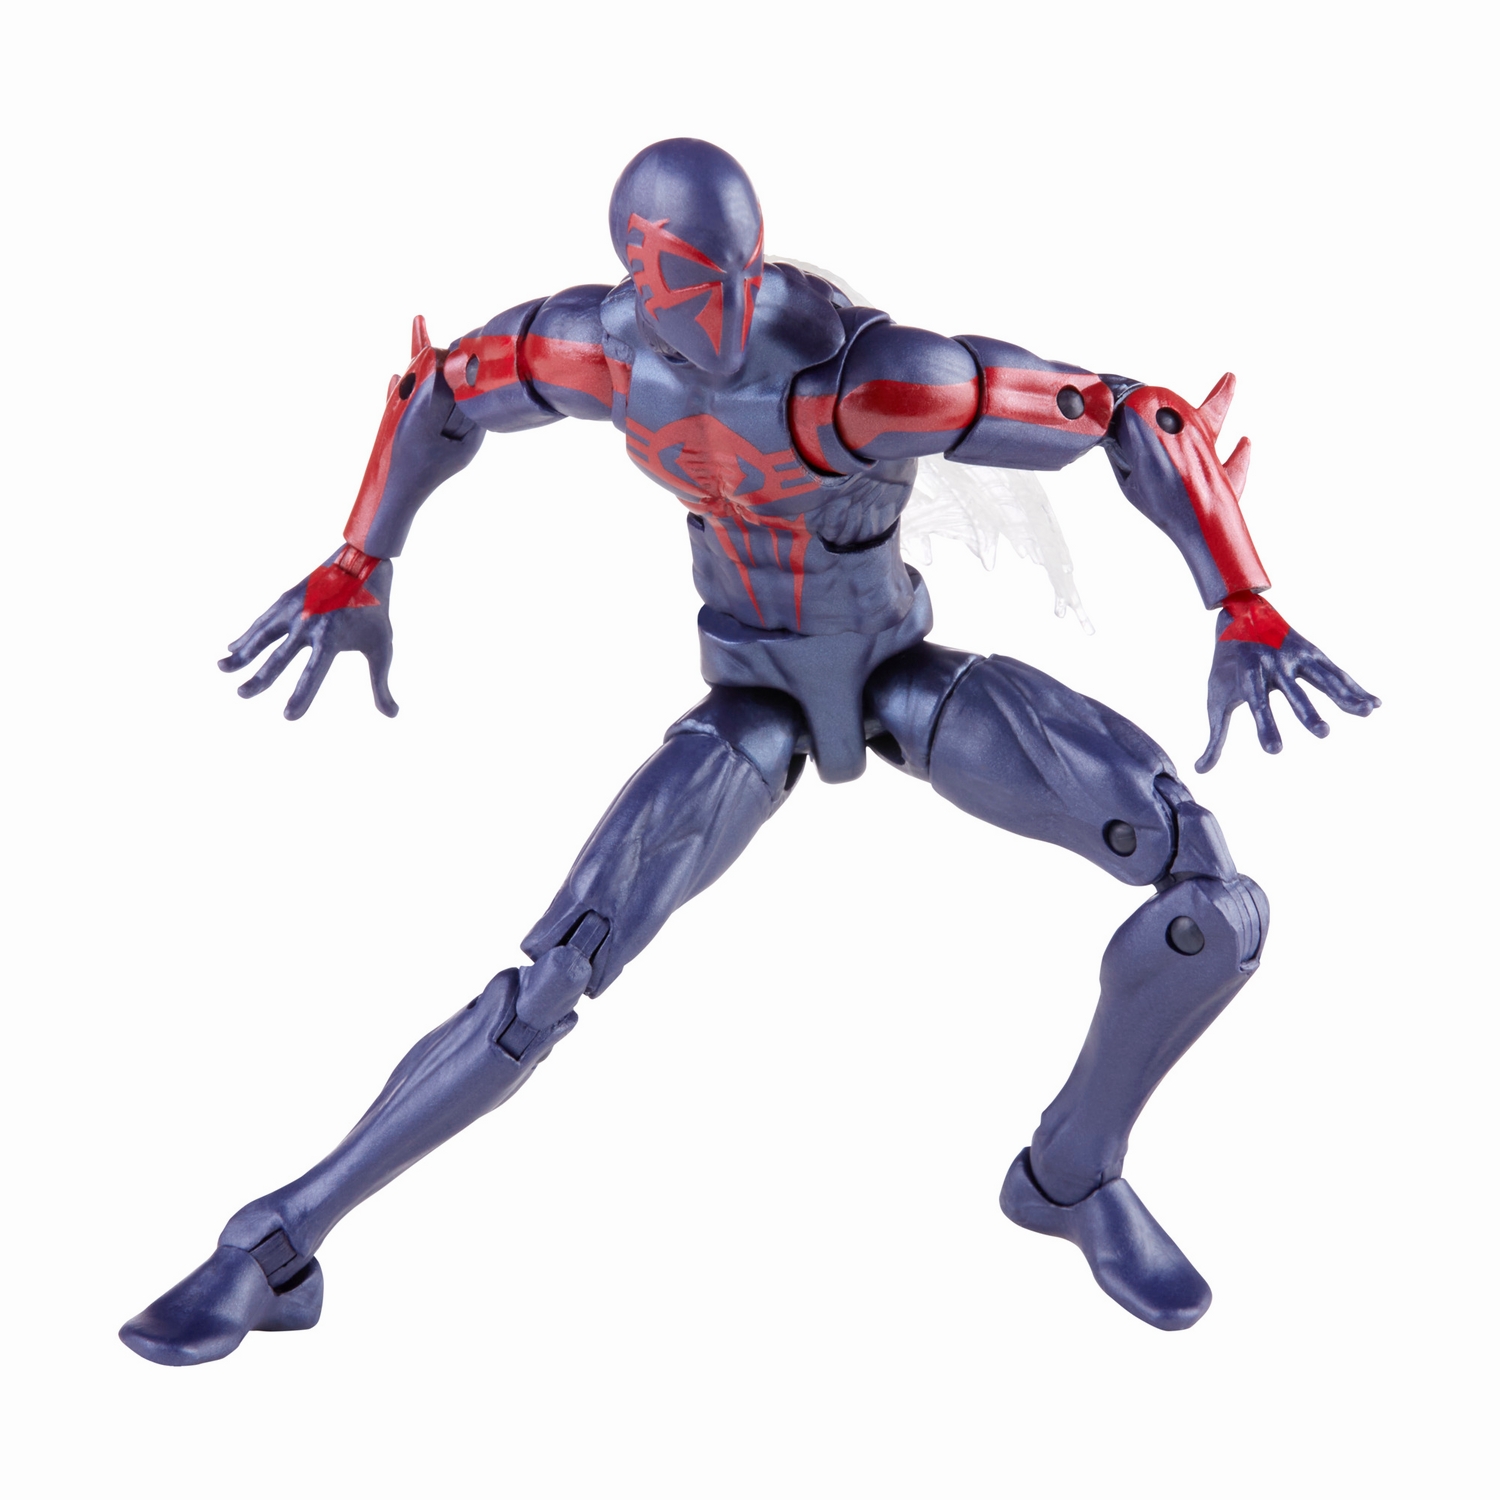 MARVEL LEGENDS SERIES 6-INCH SPIDER-MAN 2099 Figure - oop (6).jpg